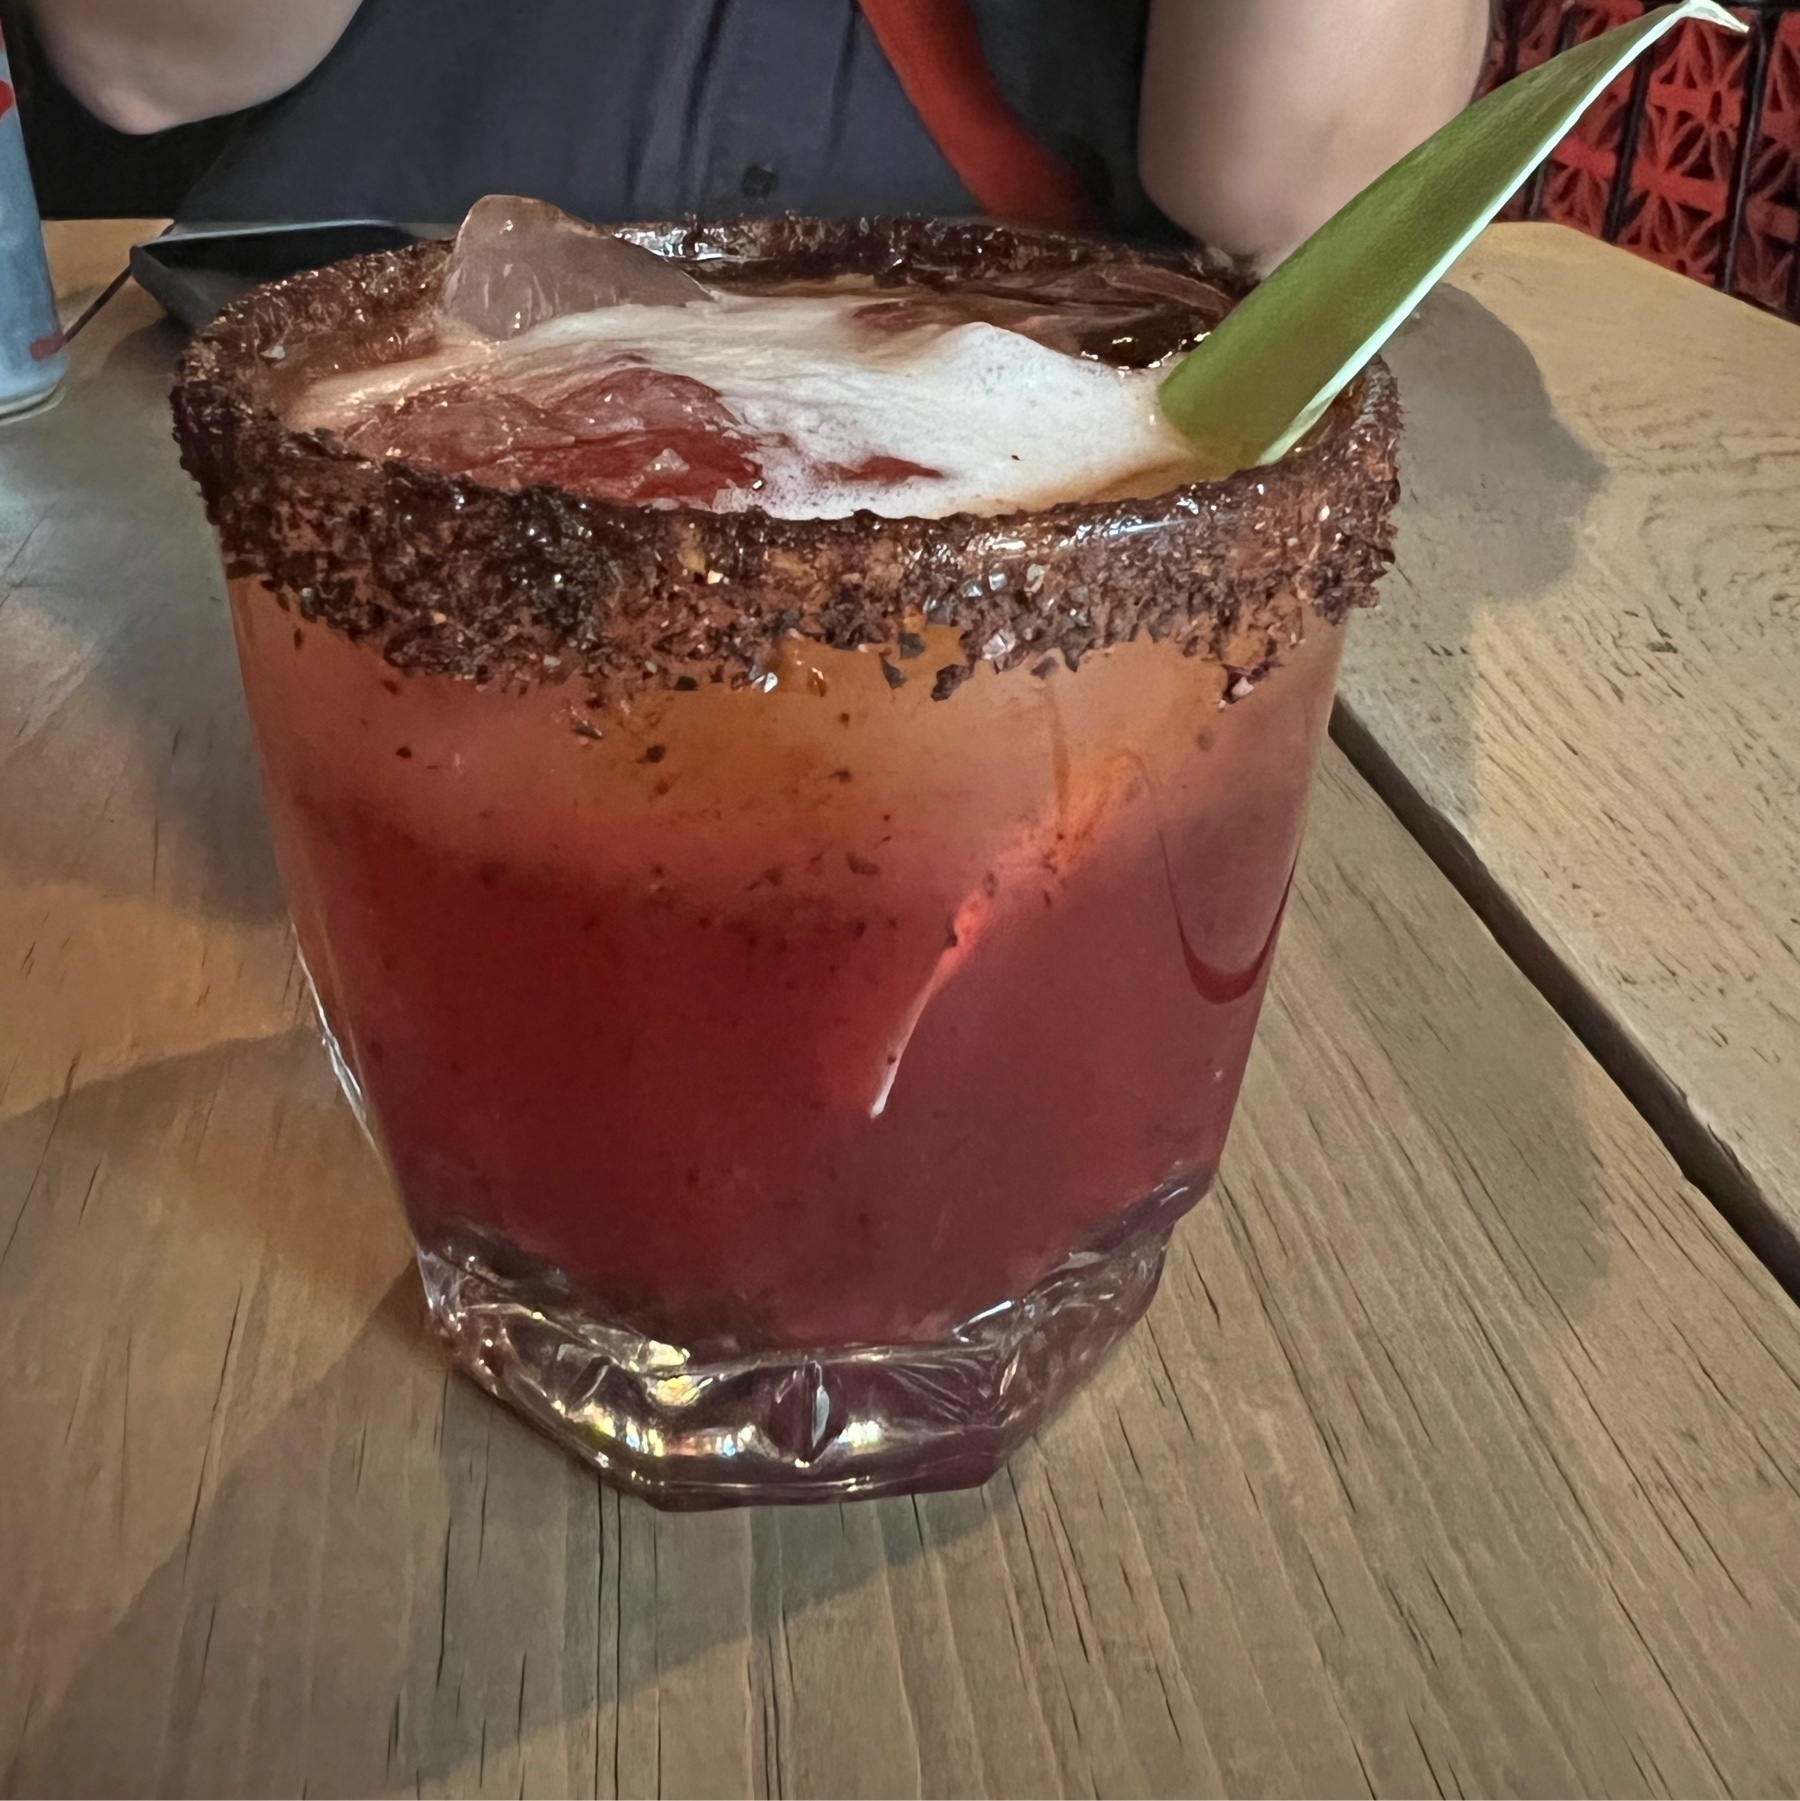 Mezcal-based drink that looks like sangria